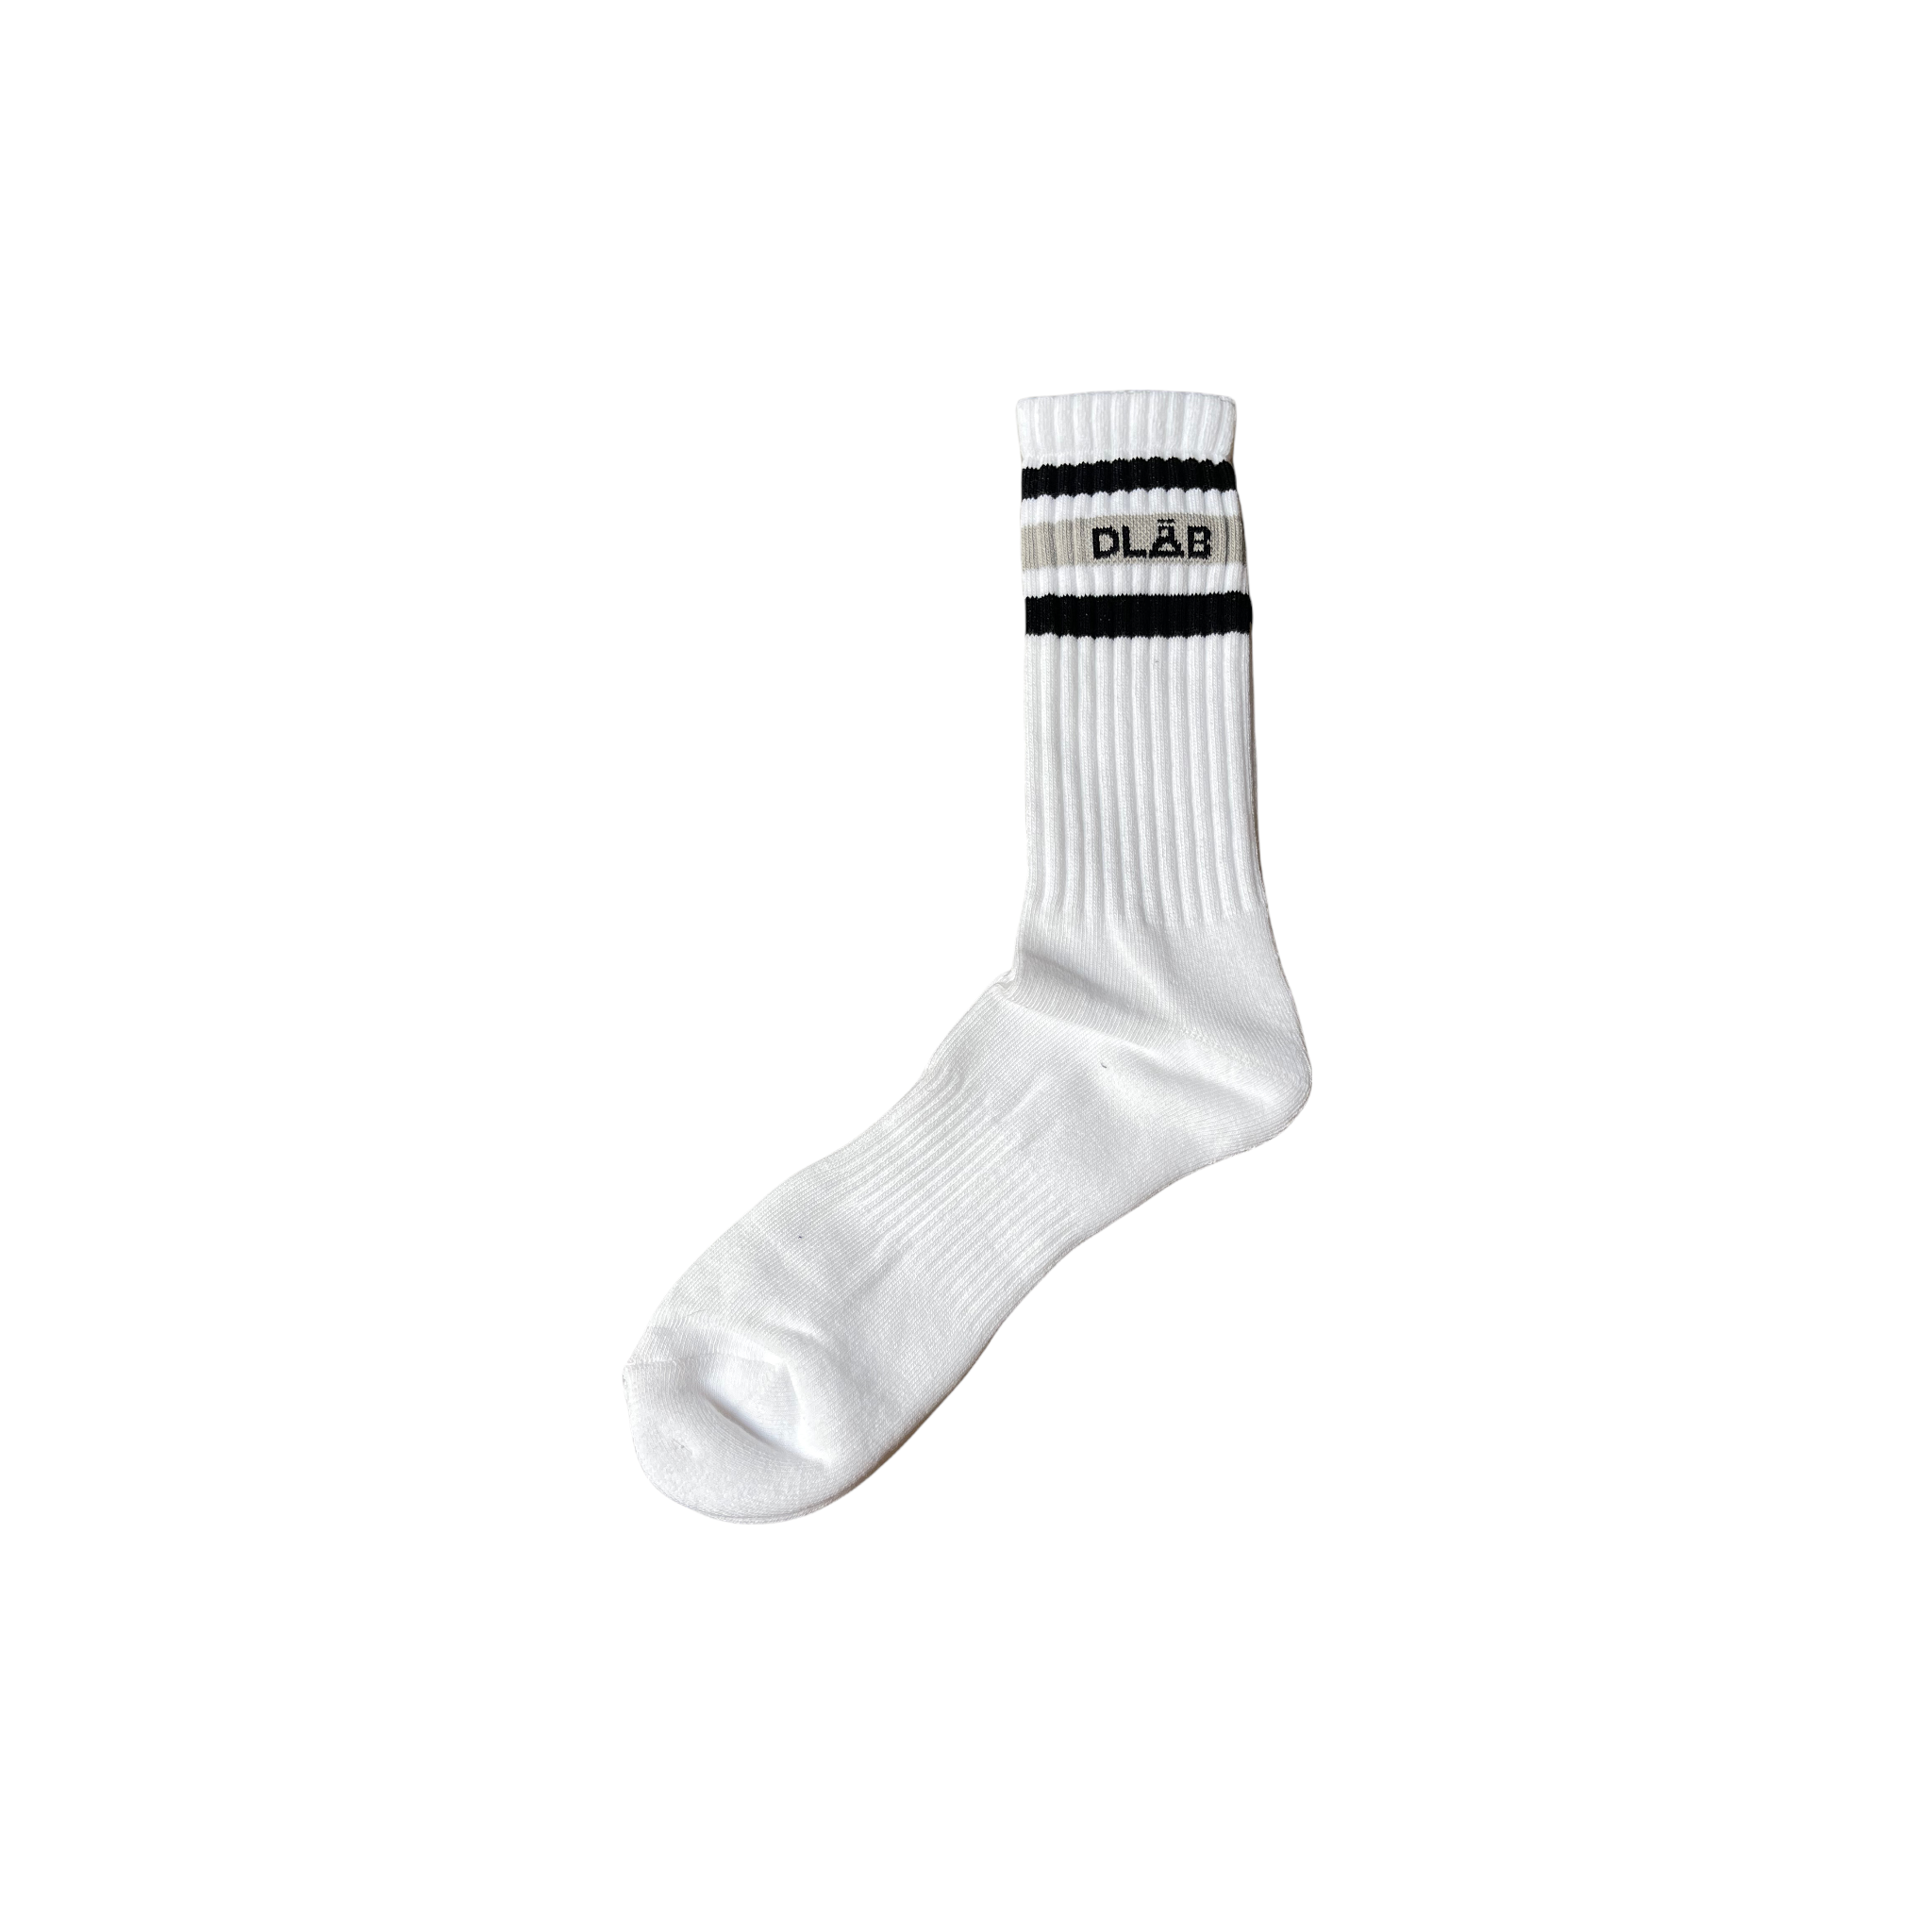 Dlab Socks (High) White/Lines